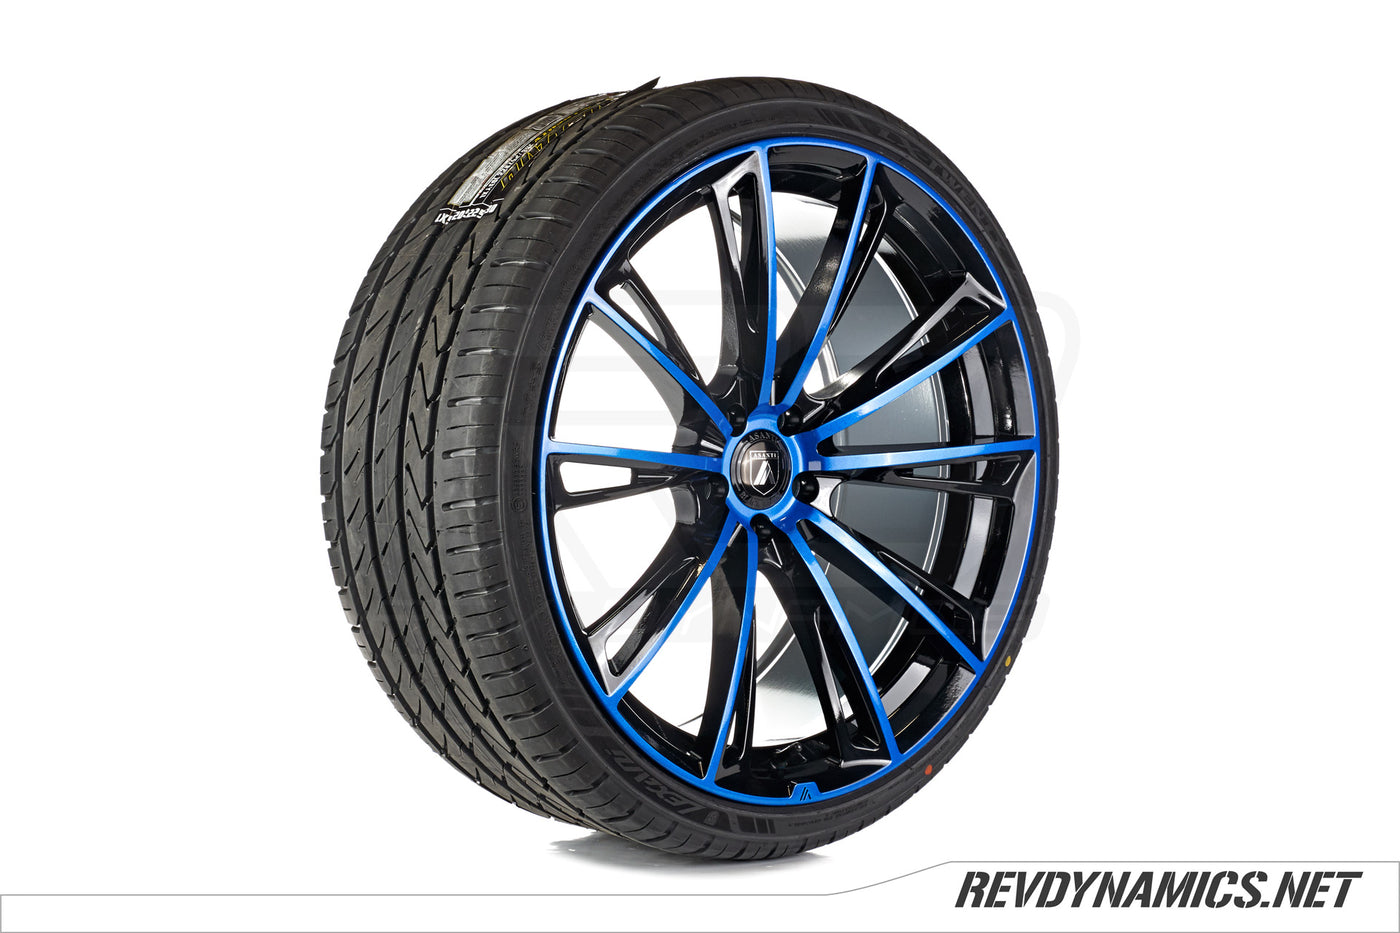 Asanti Wheel with Lexani Tire custom painted in Stealth Blue, Black, and Super Chrome